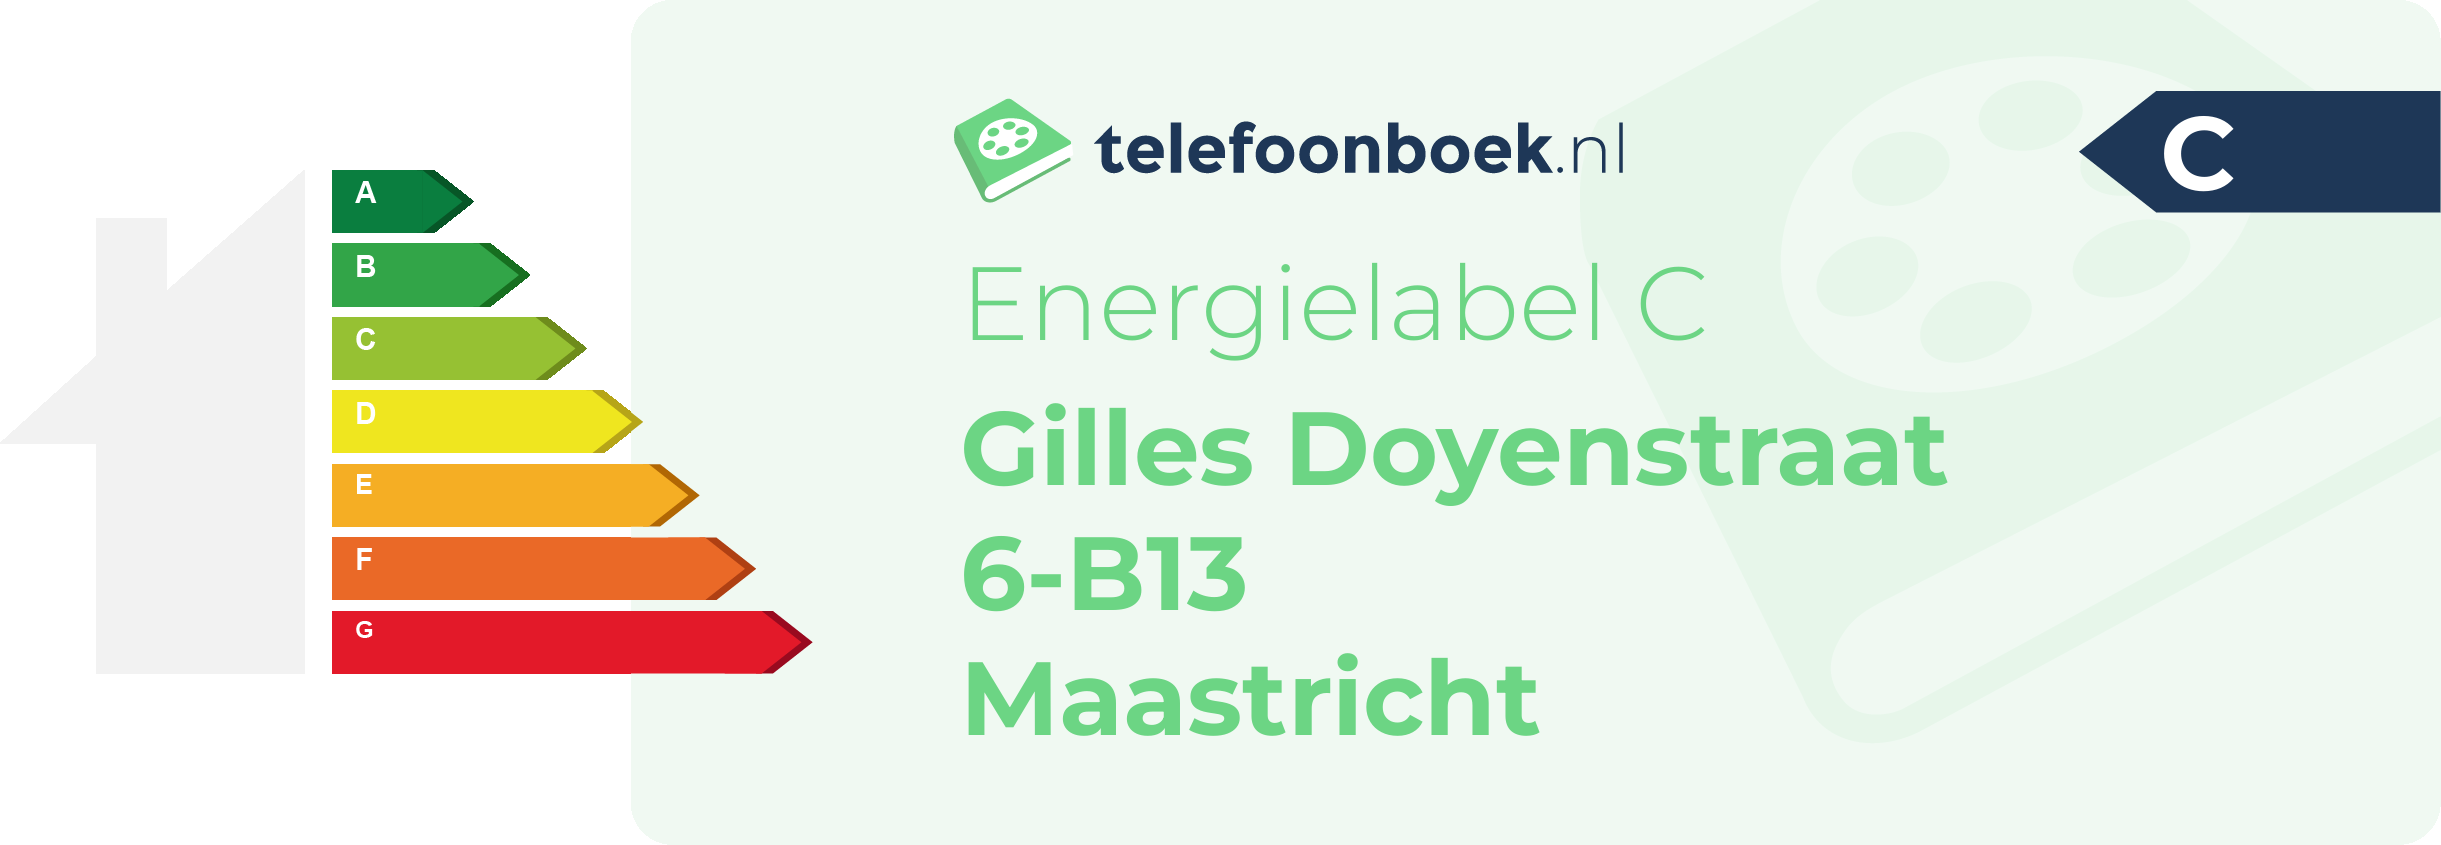 Energielabel Gilles Doyenstraat 6-B13 Maastricht